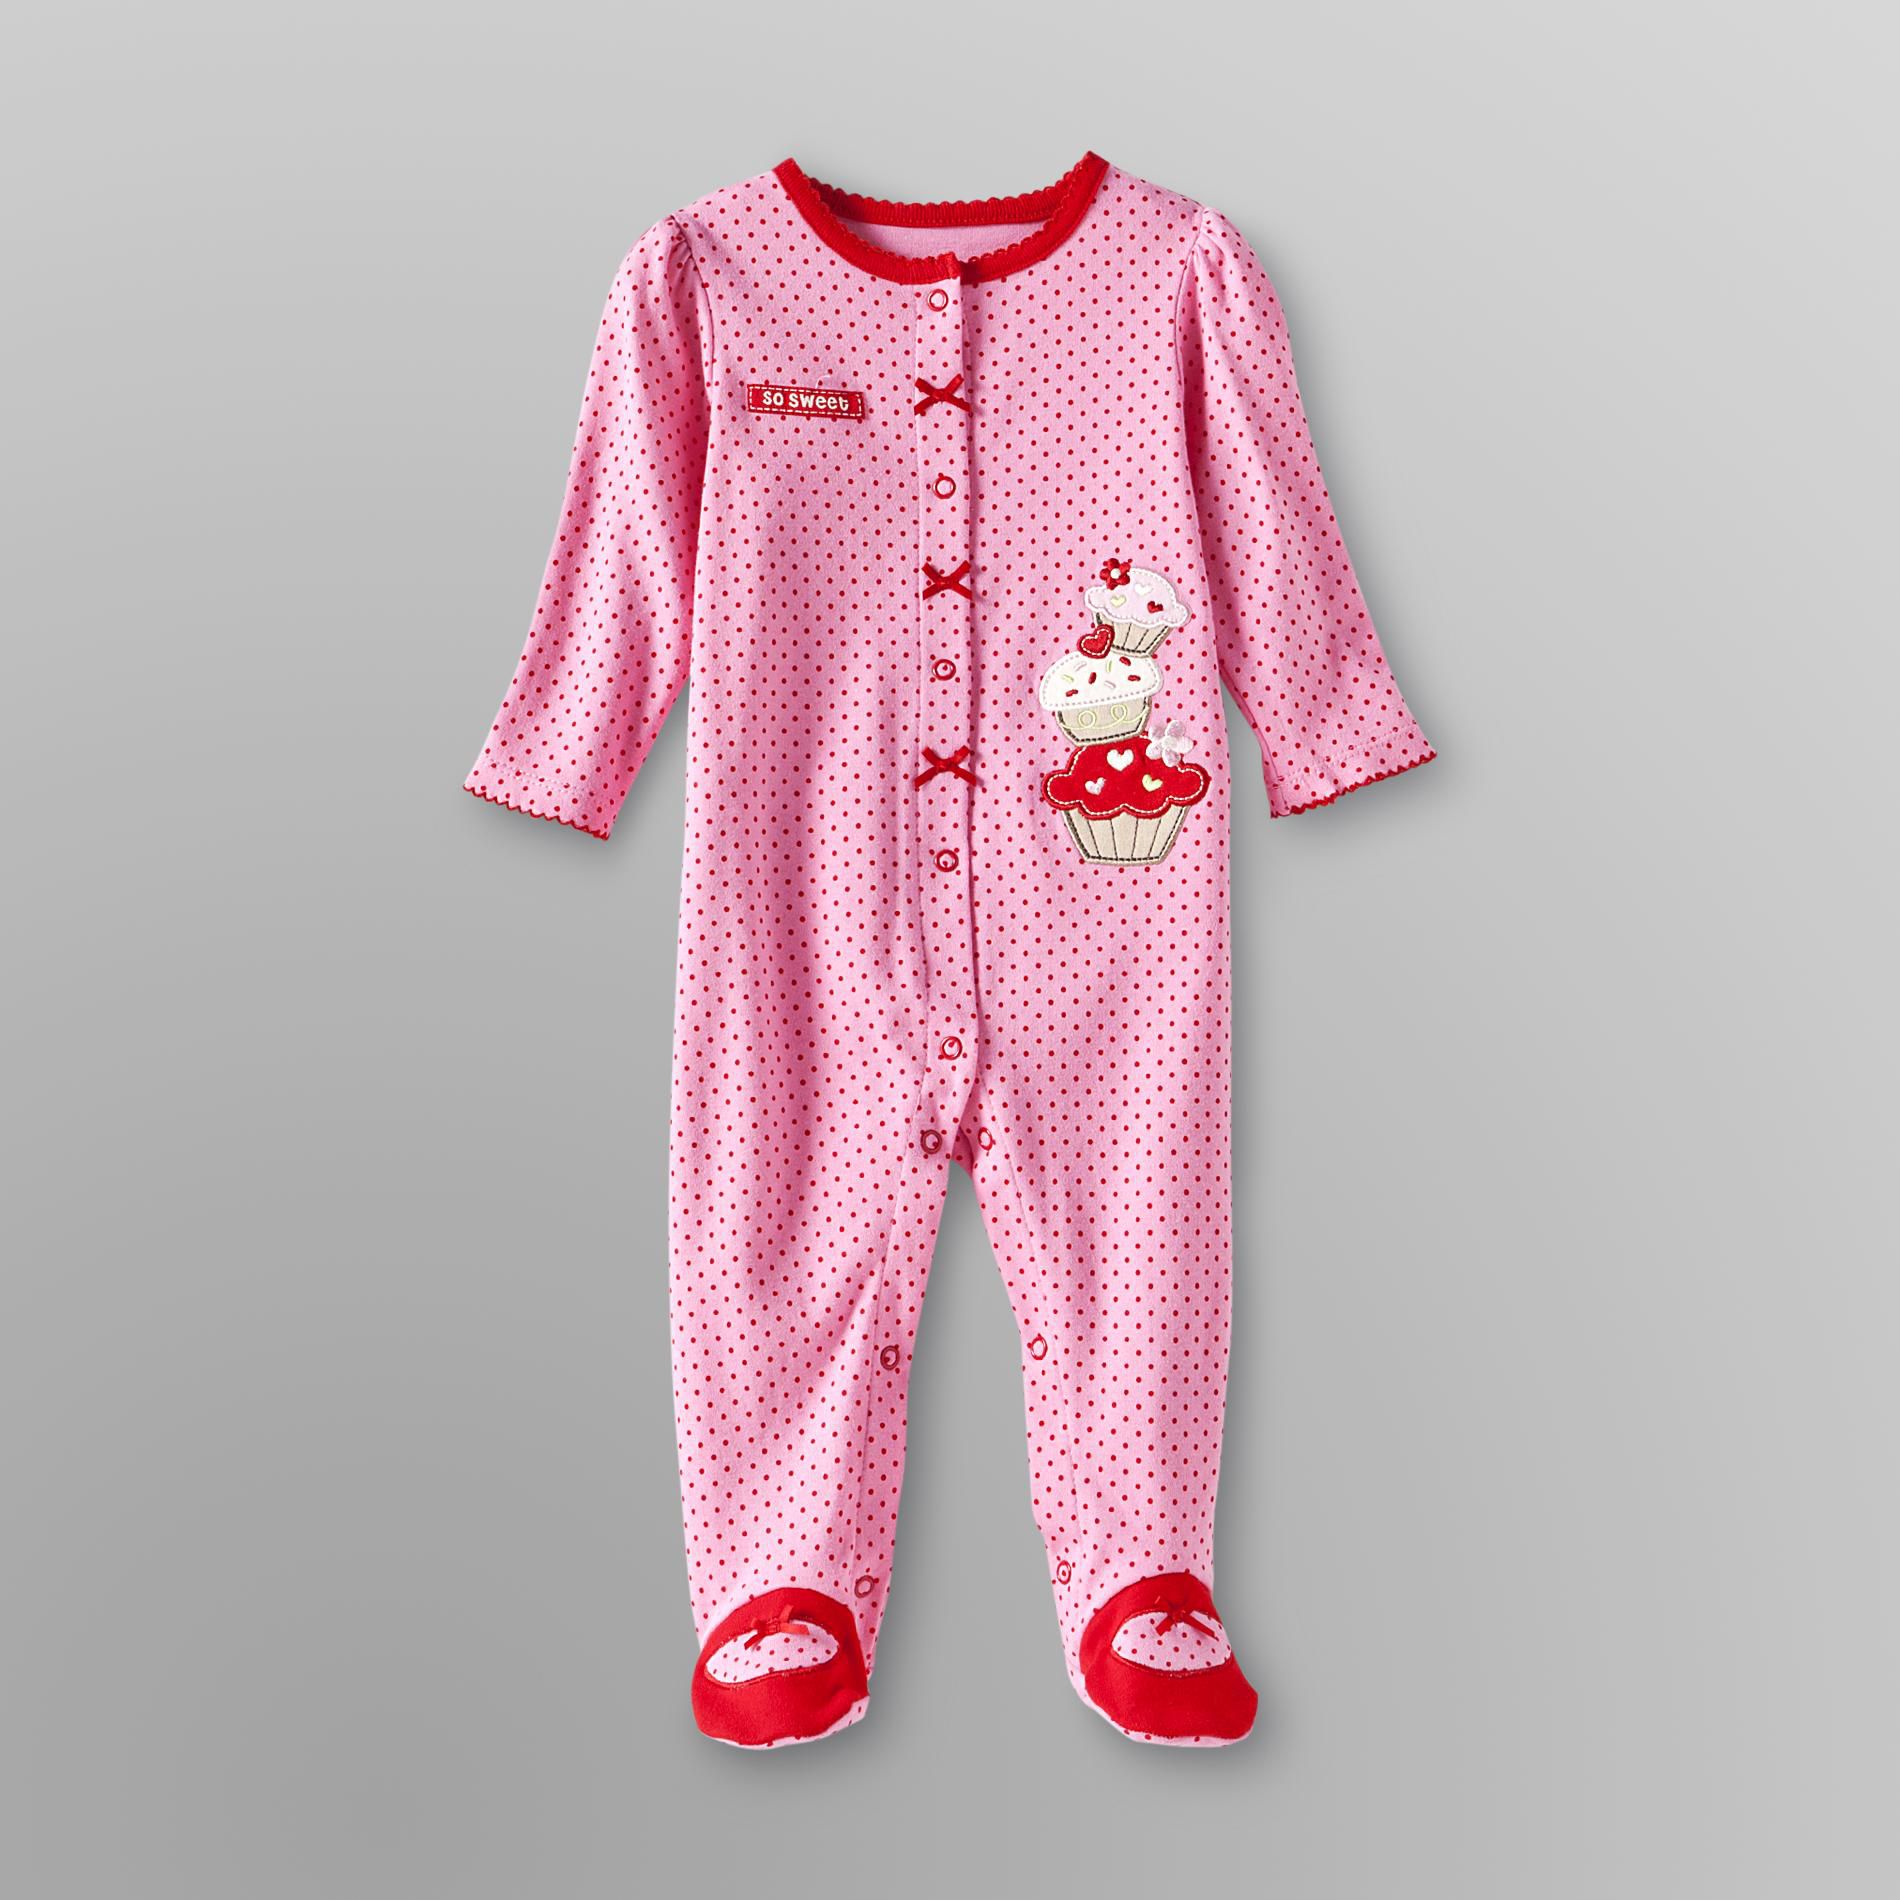 Small Wonders Infant Girl's Sleeper Pajamas - Cupcake